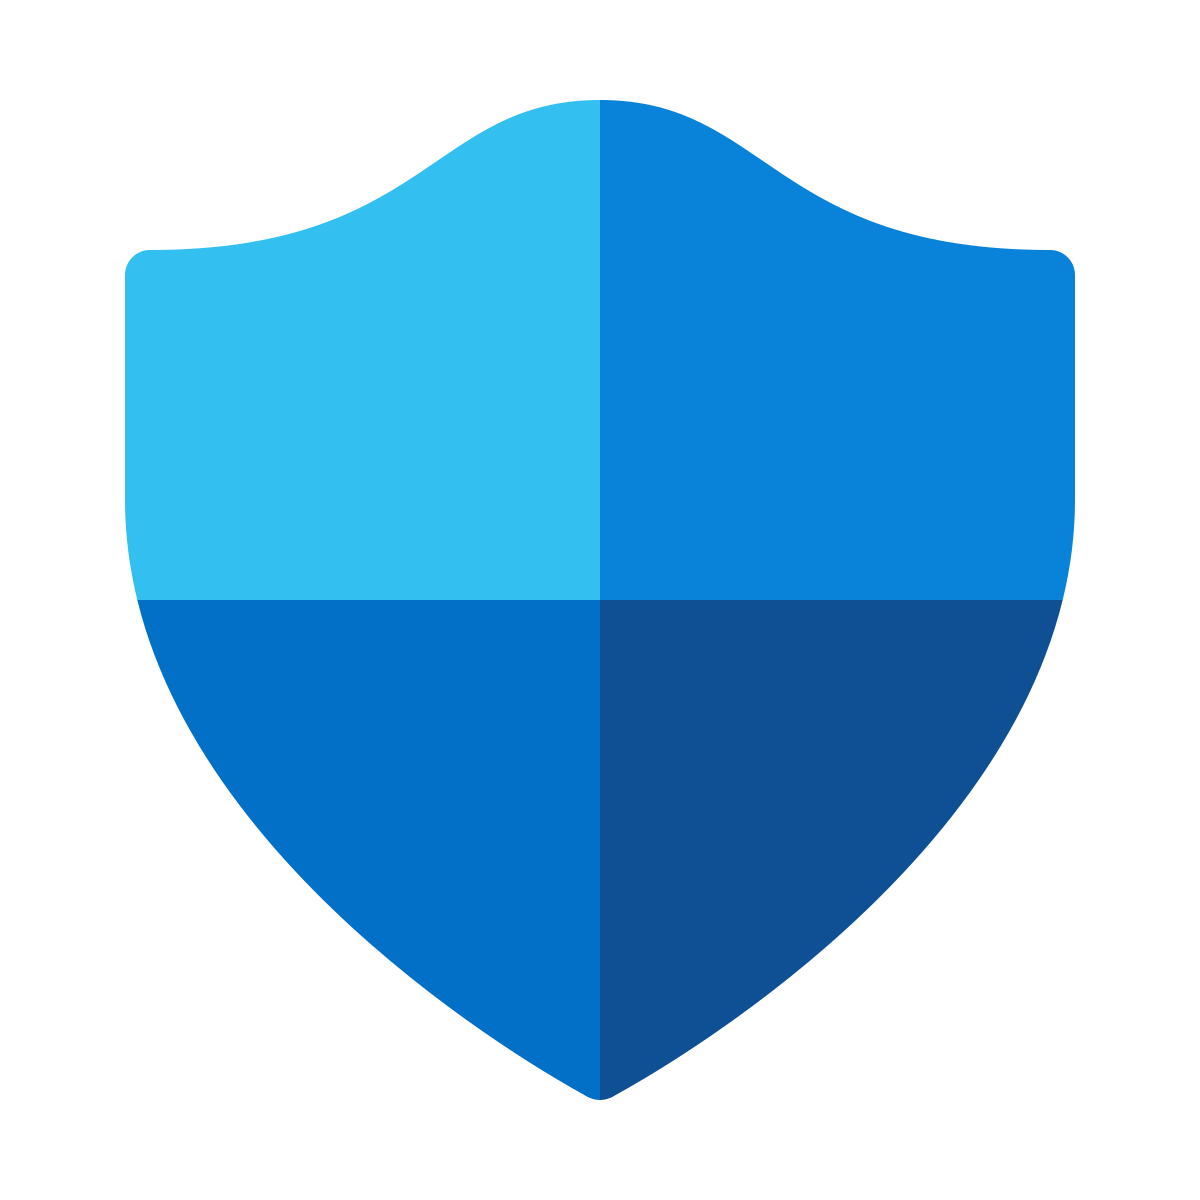 Microsoft Defender logo